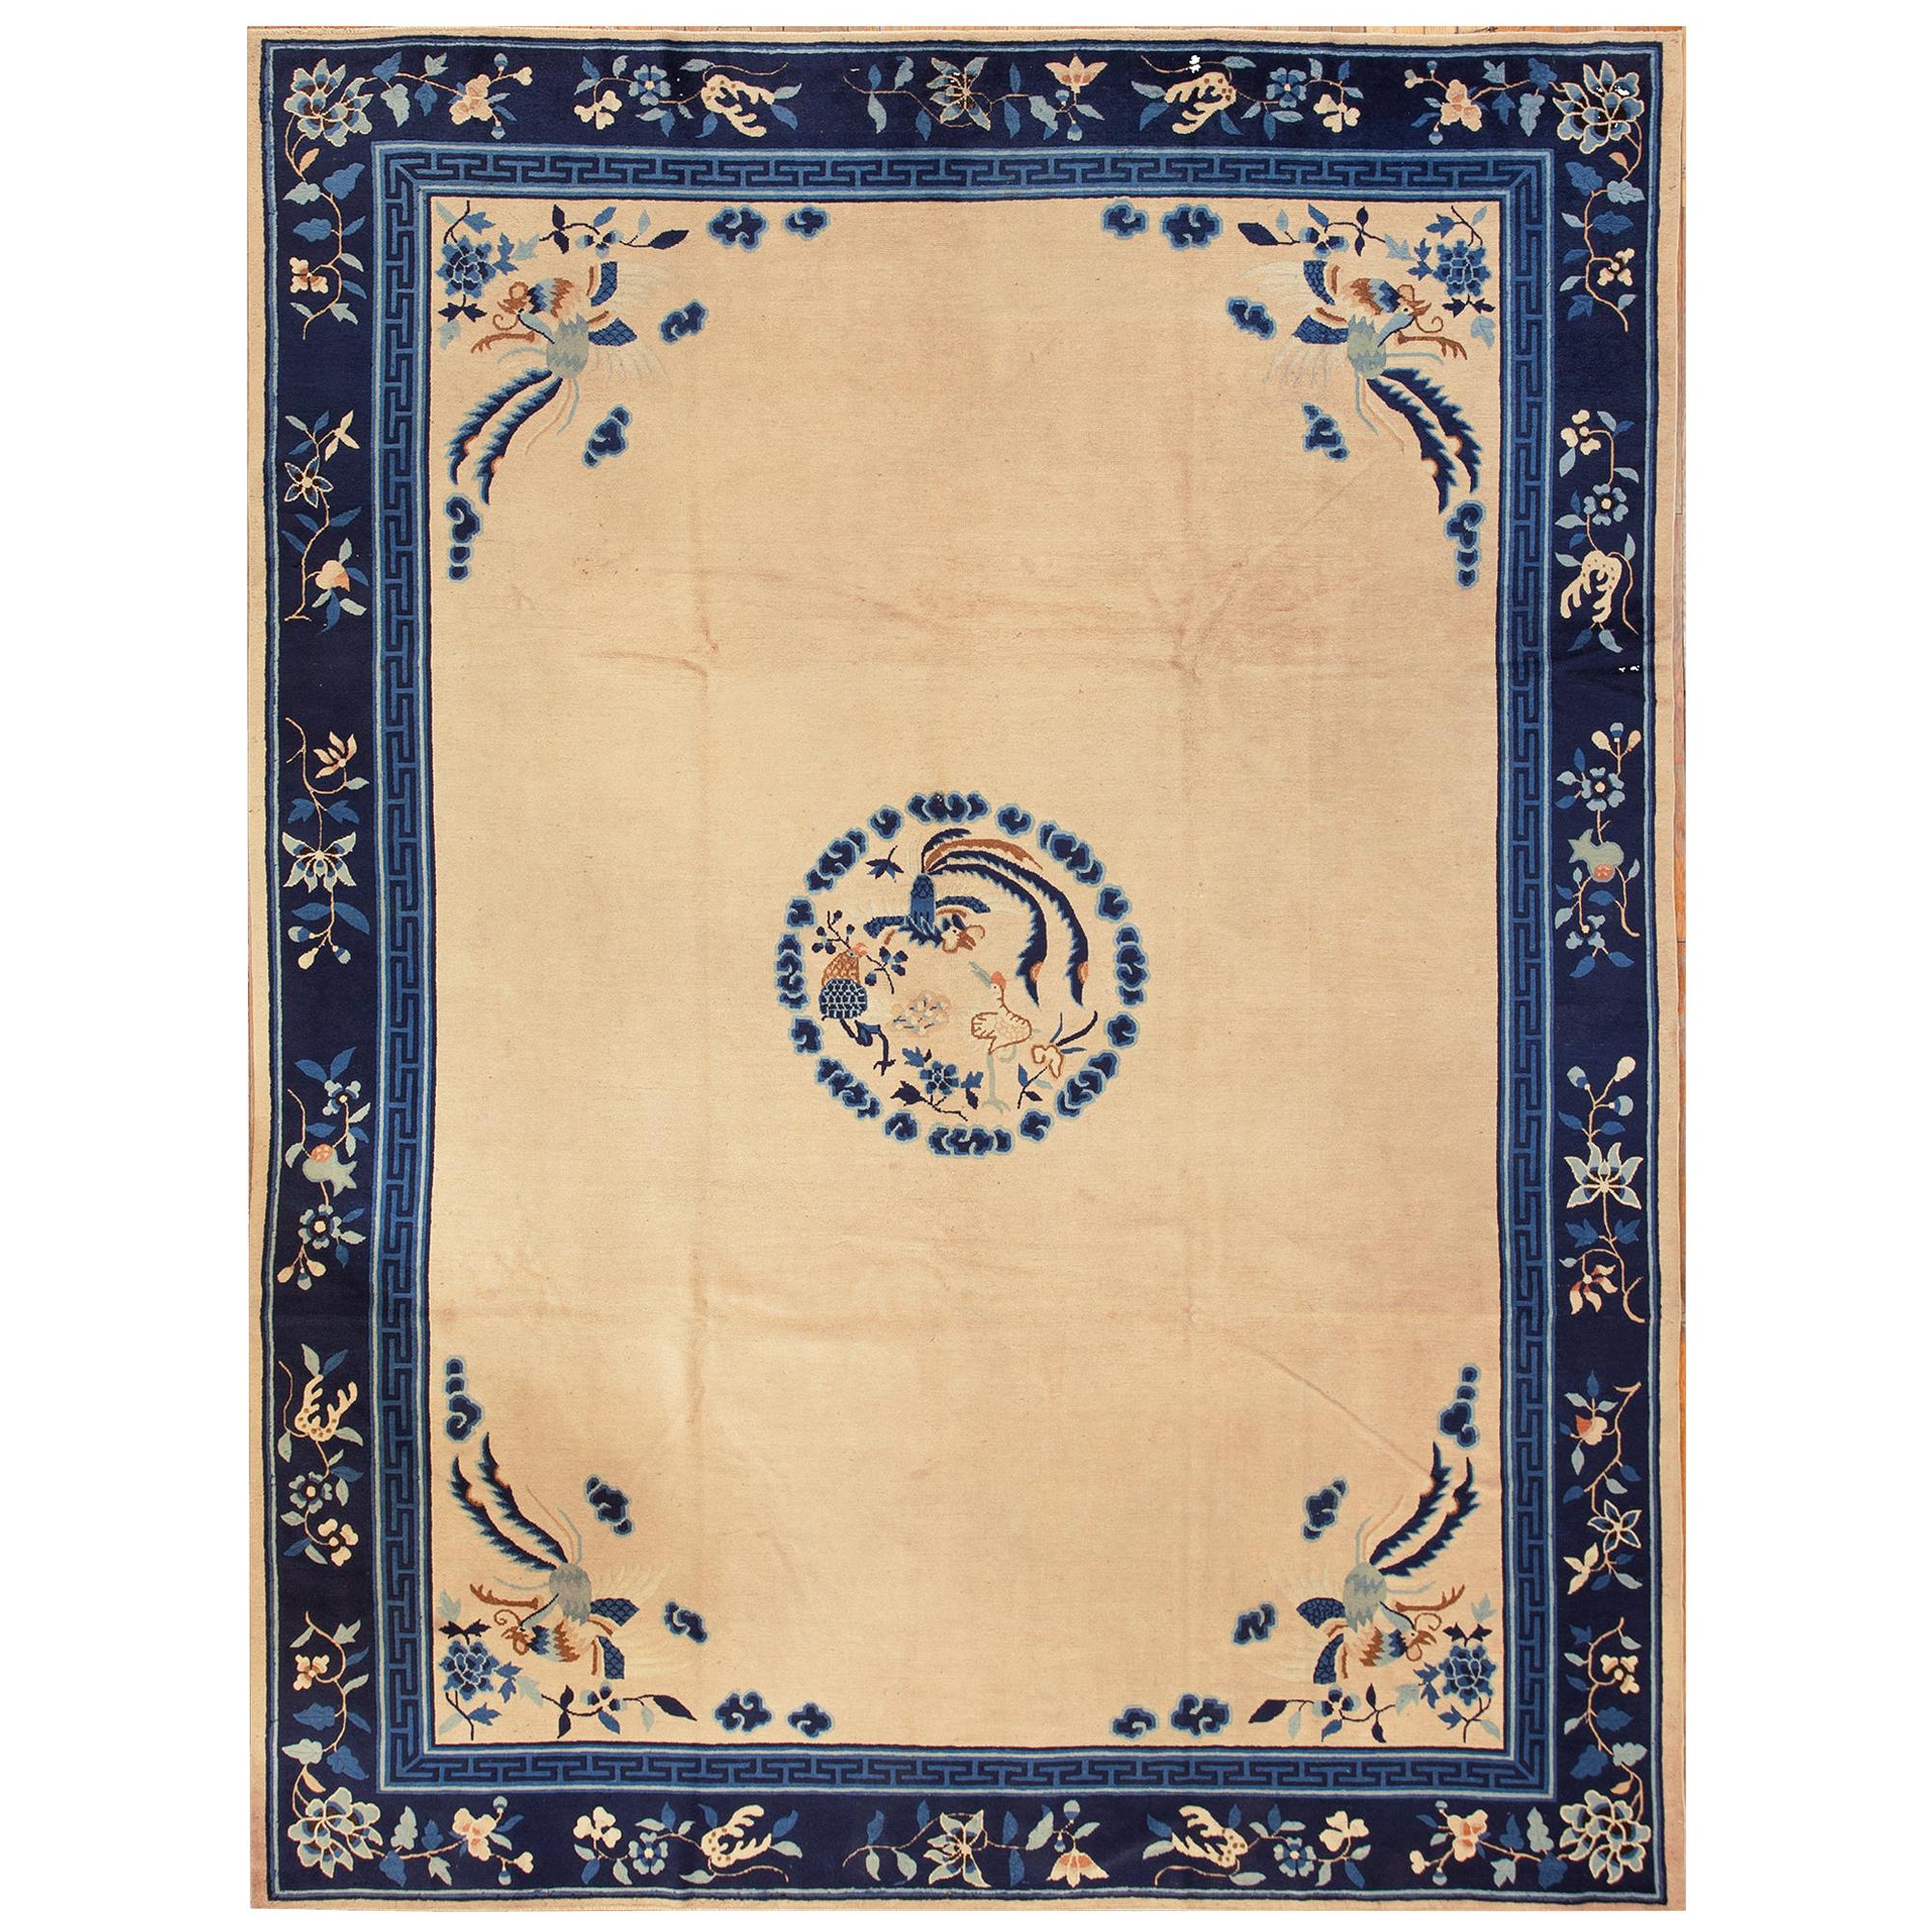 Early 20th Century Chinese Peking Carpet ( 8'4" x 11' - 254 x 335 )